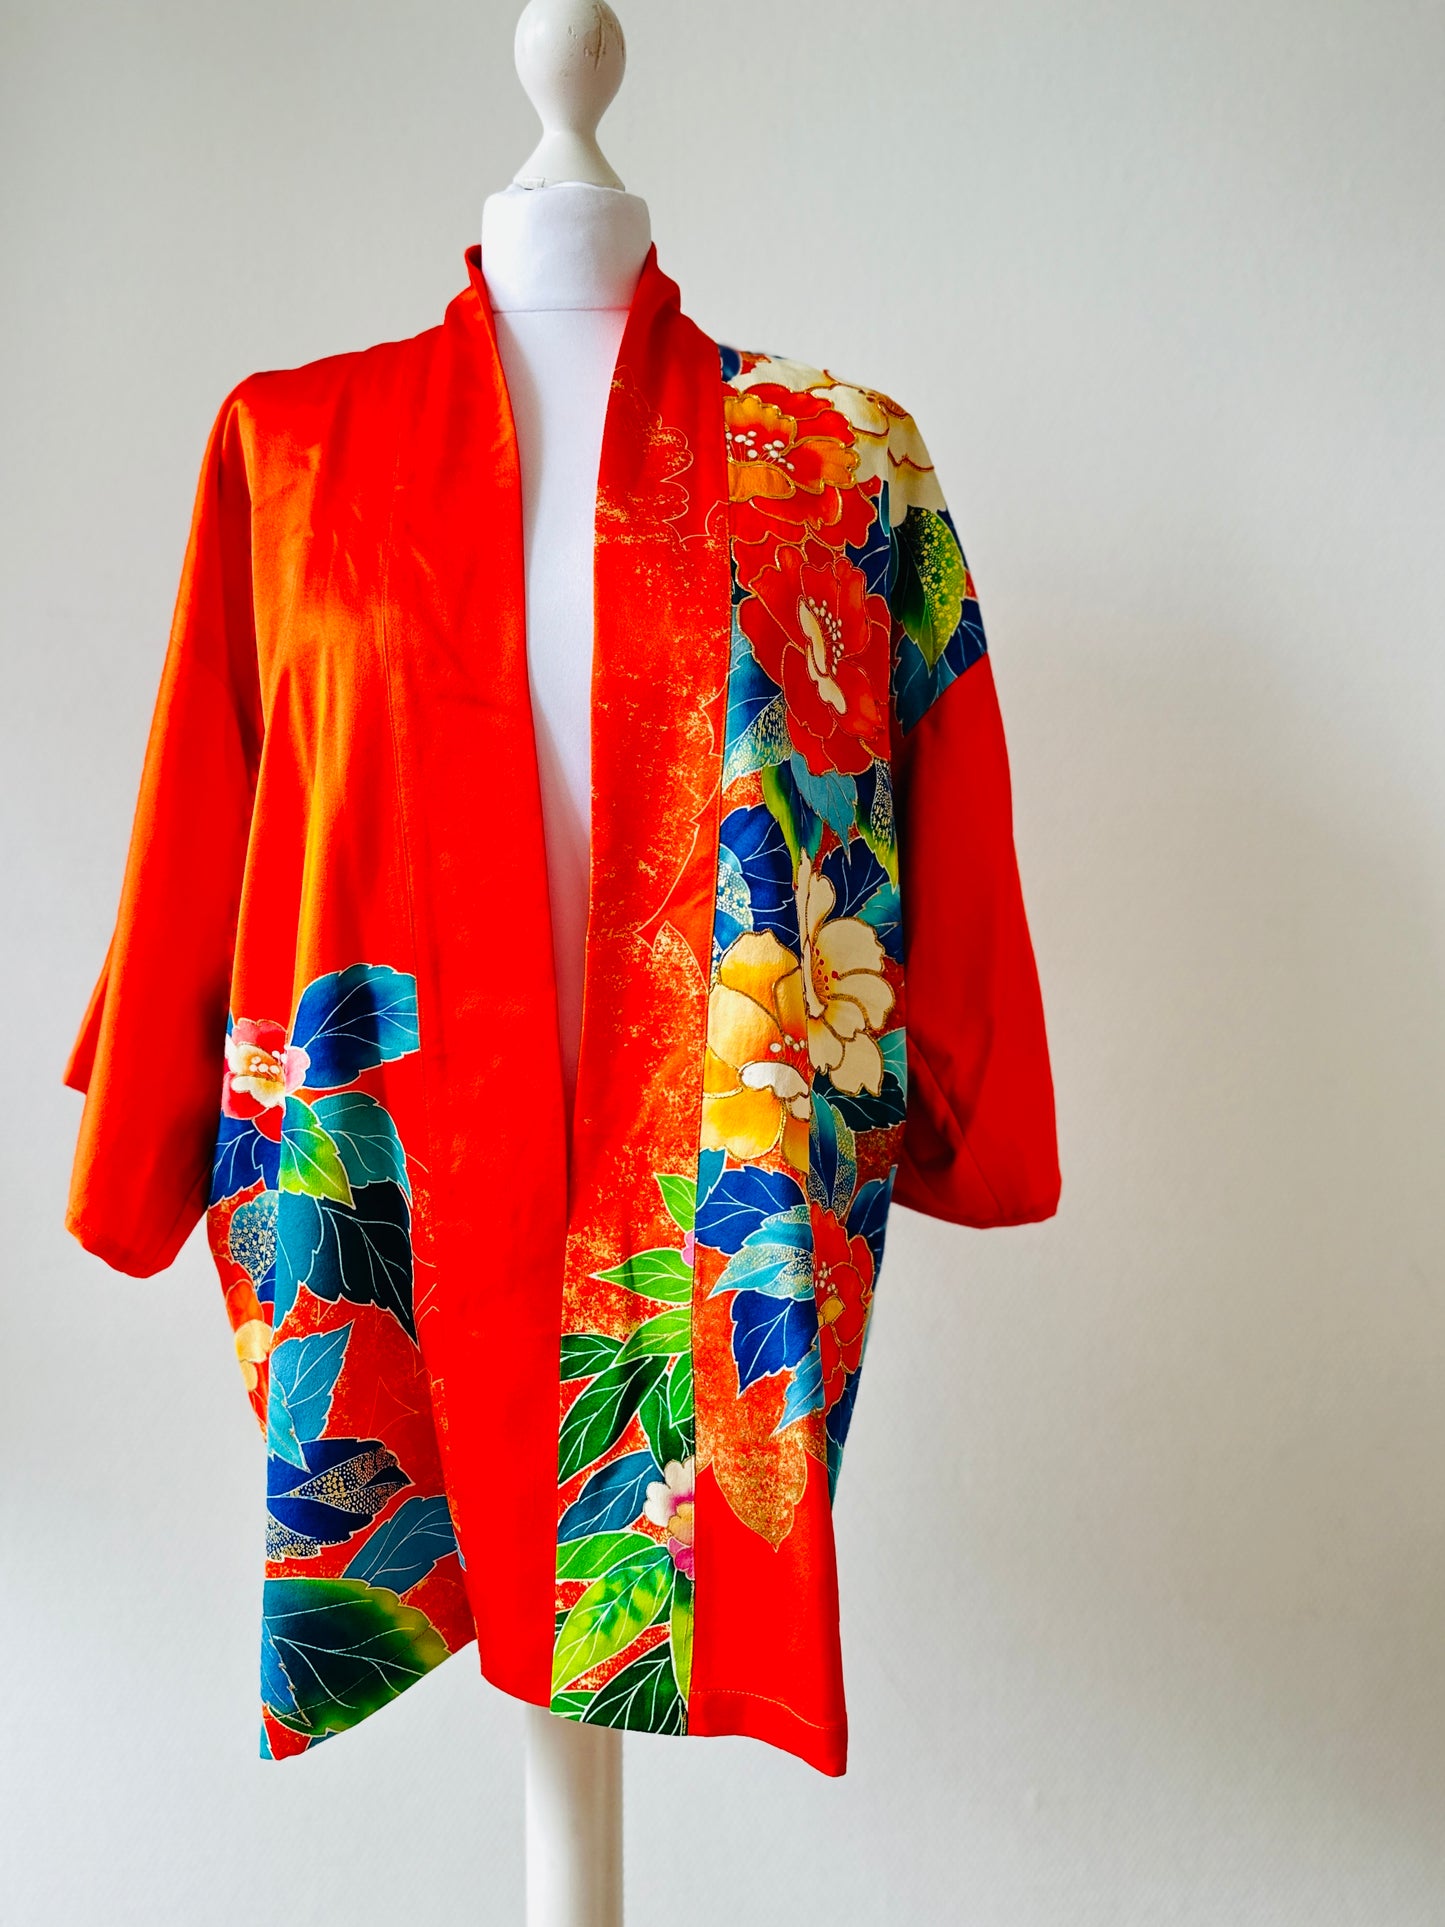 Japanese Vintage Kimono Haori, Japanese Hanten Jacket, Robe Dress, Orange Peony, Japanese Floral pattern, Unisex